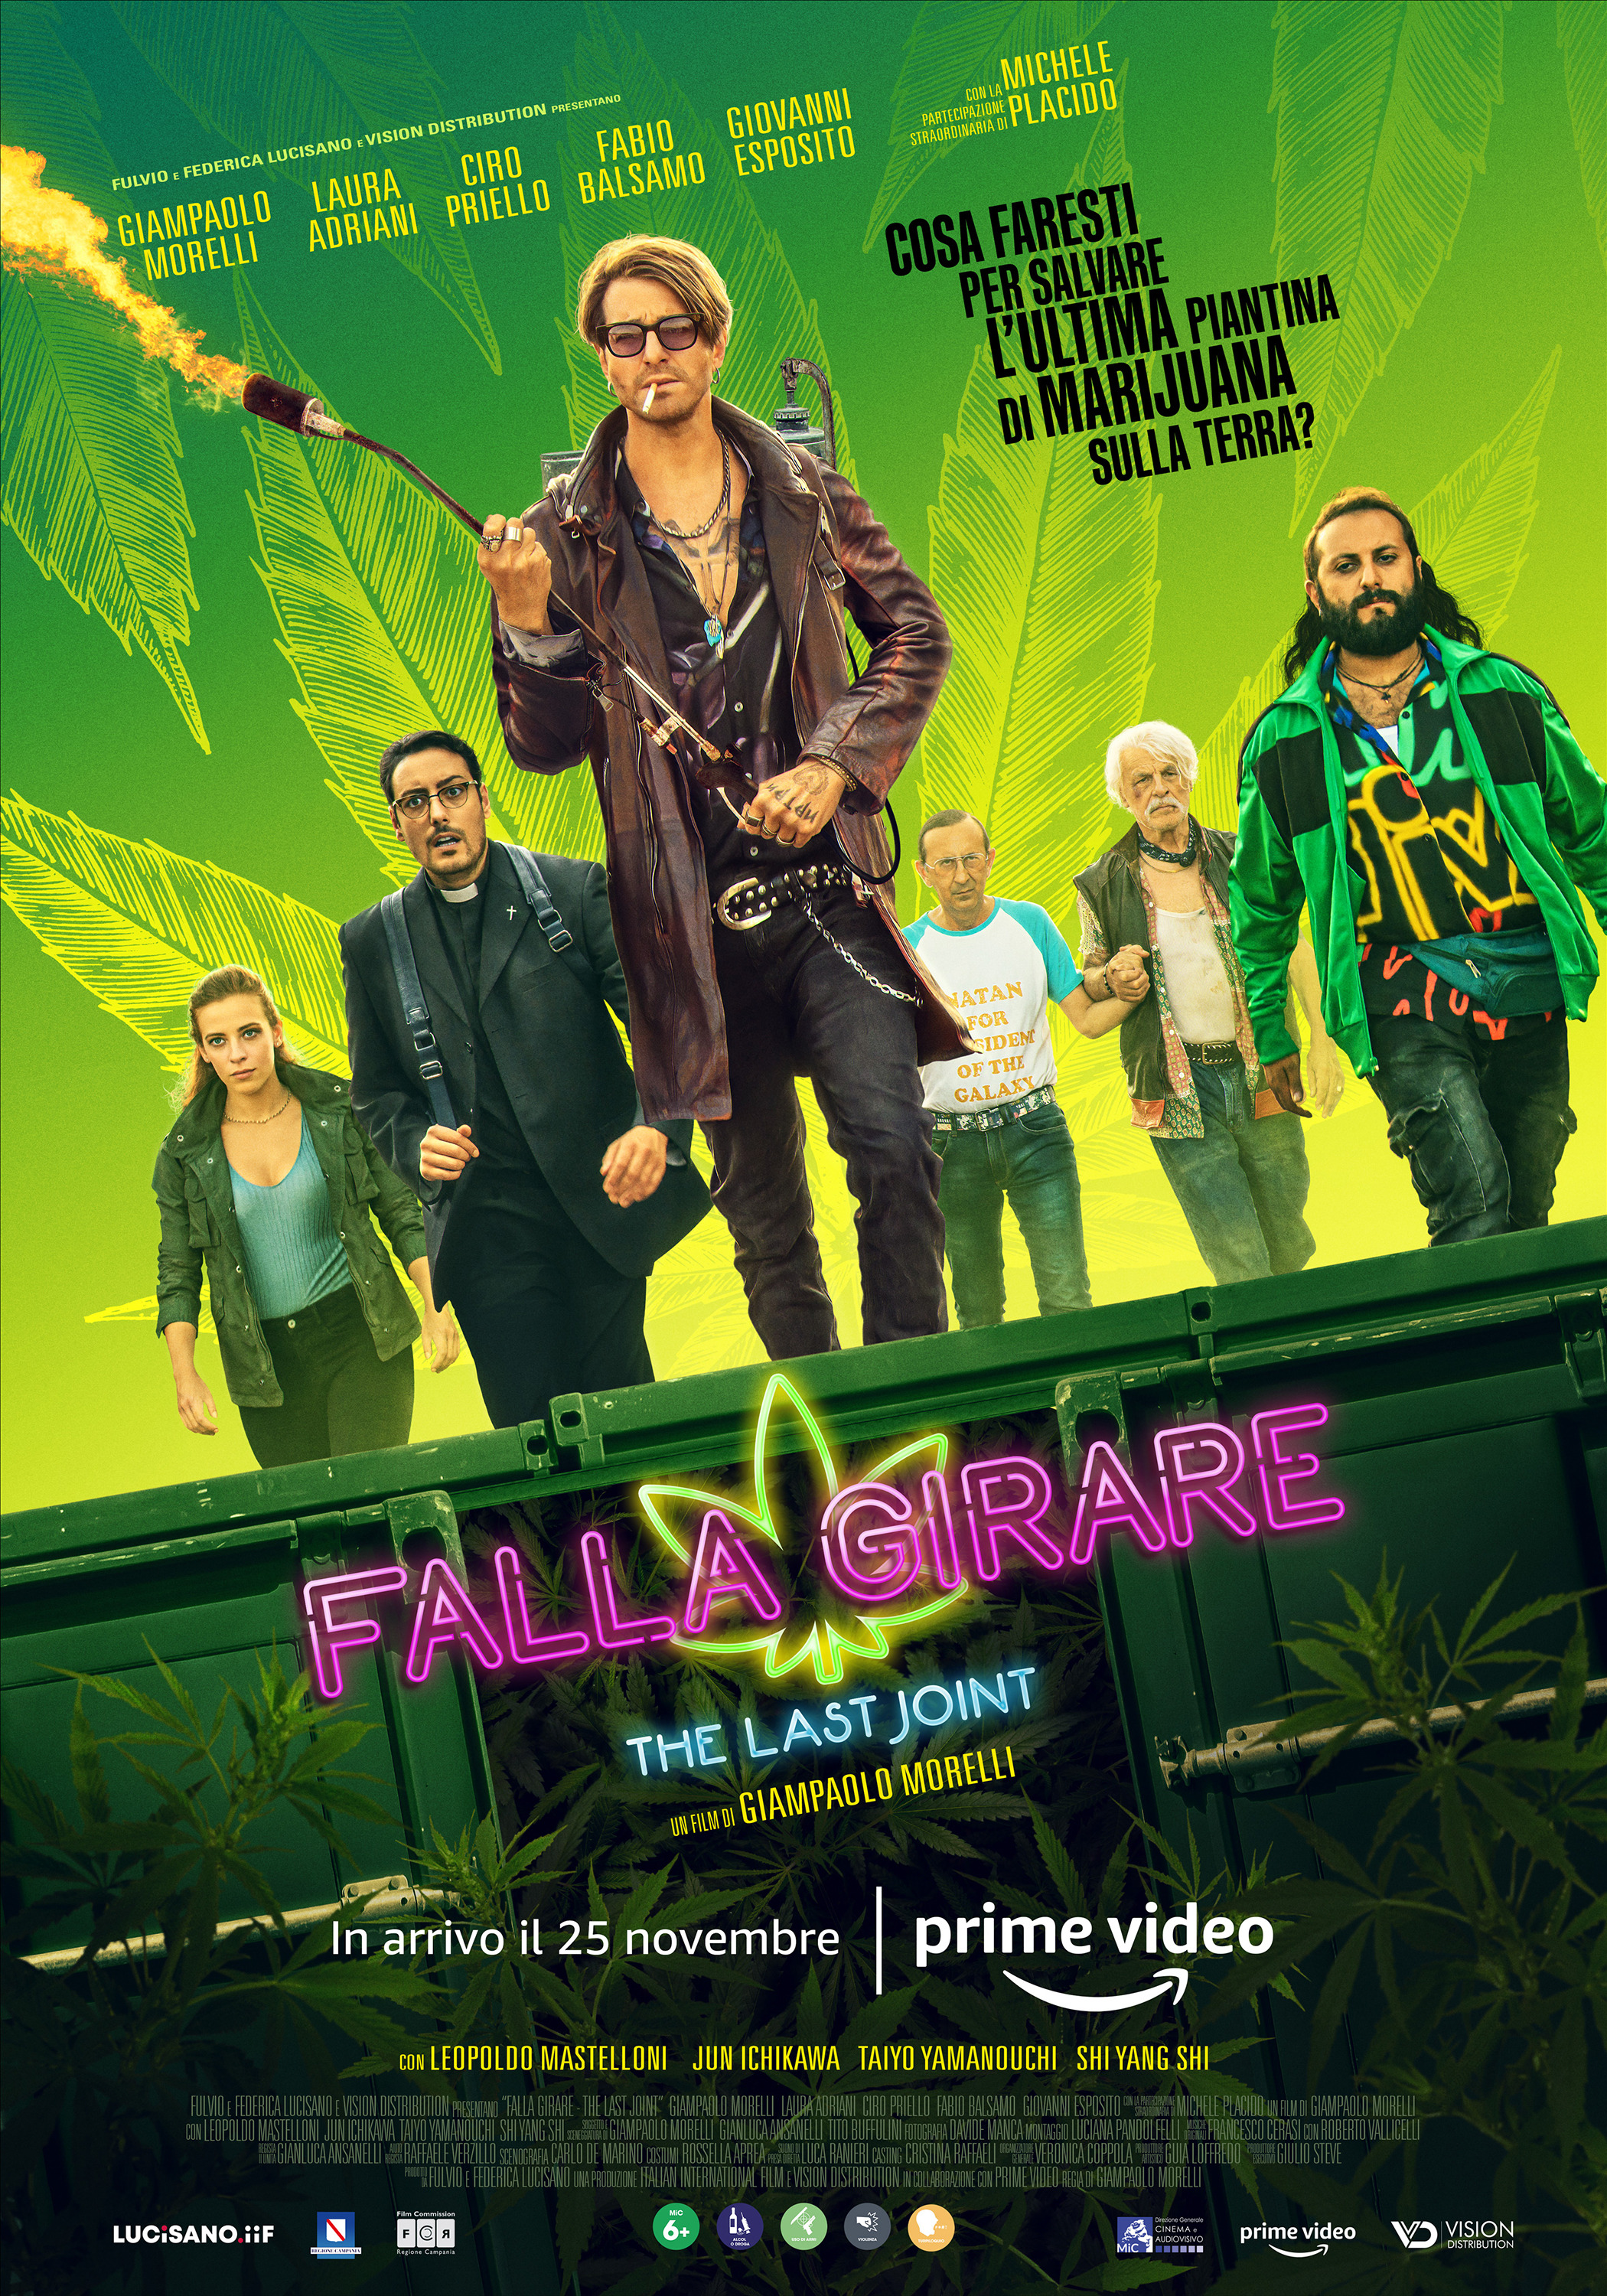 Mega Sized Movie Poster Image for Falla girare 